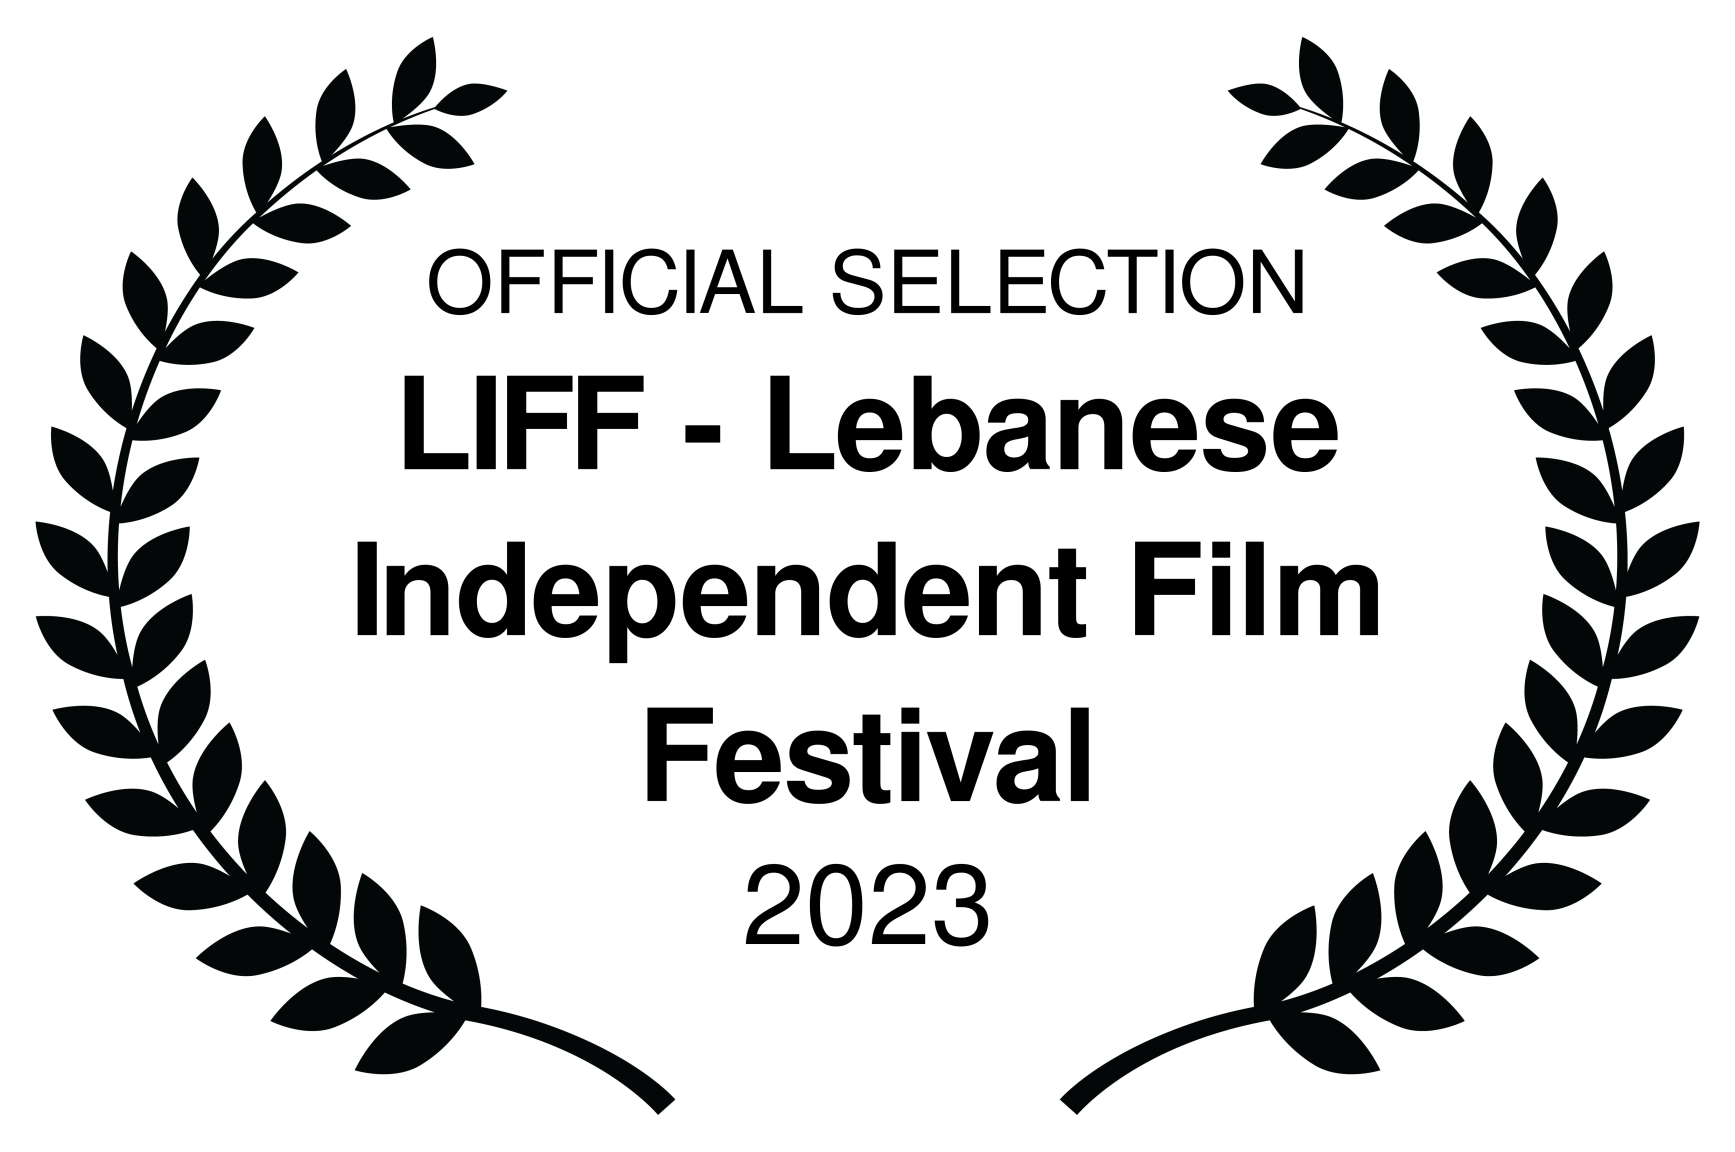 LIFF - Lebanese Independent Film Festival laurel